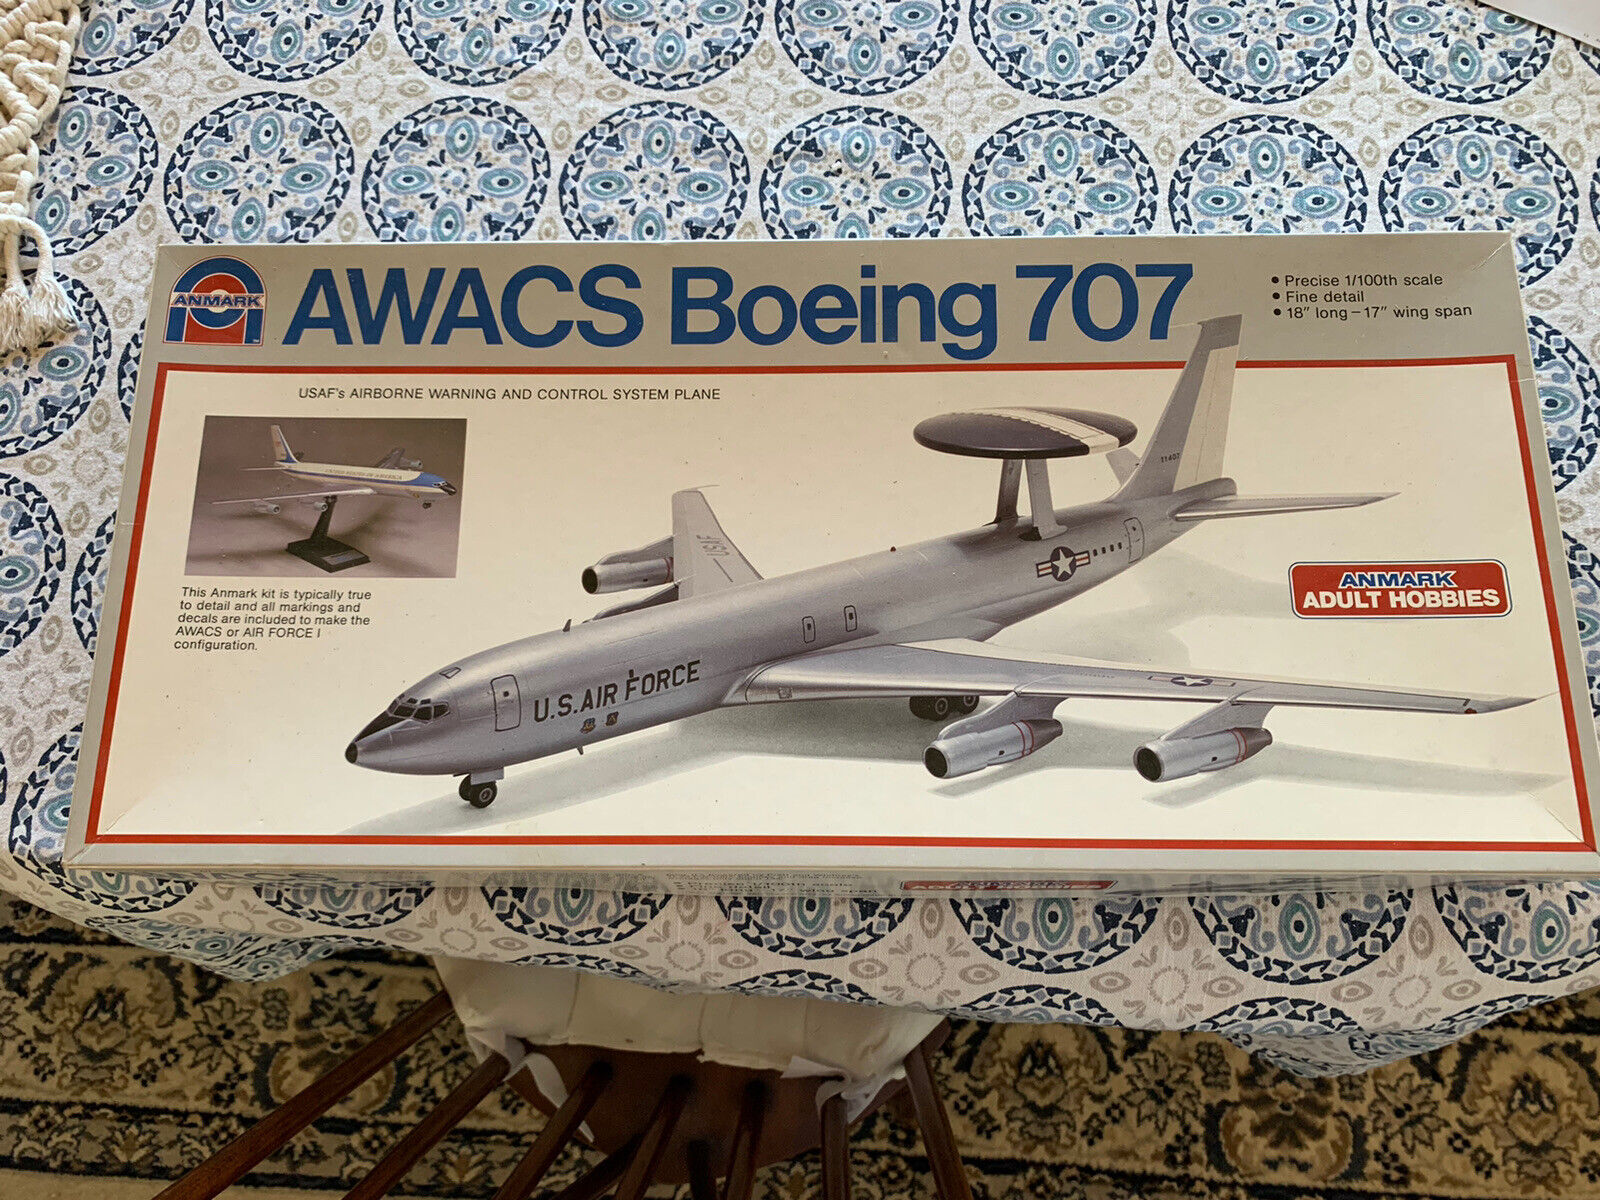 1/100 Scale Boeing 707 Model Kit by Anmark(Entex) Models